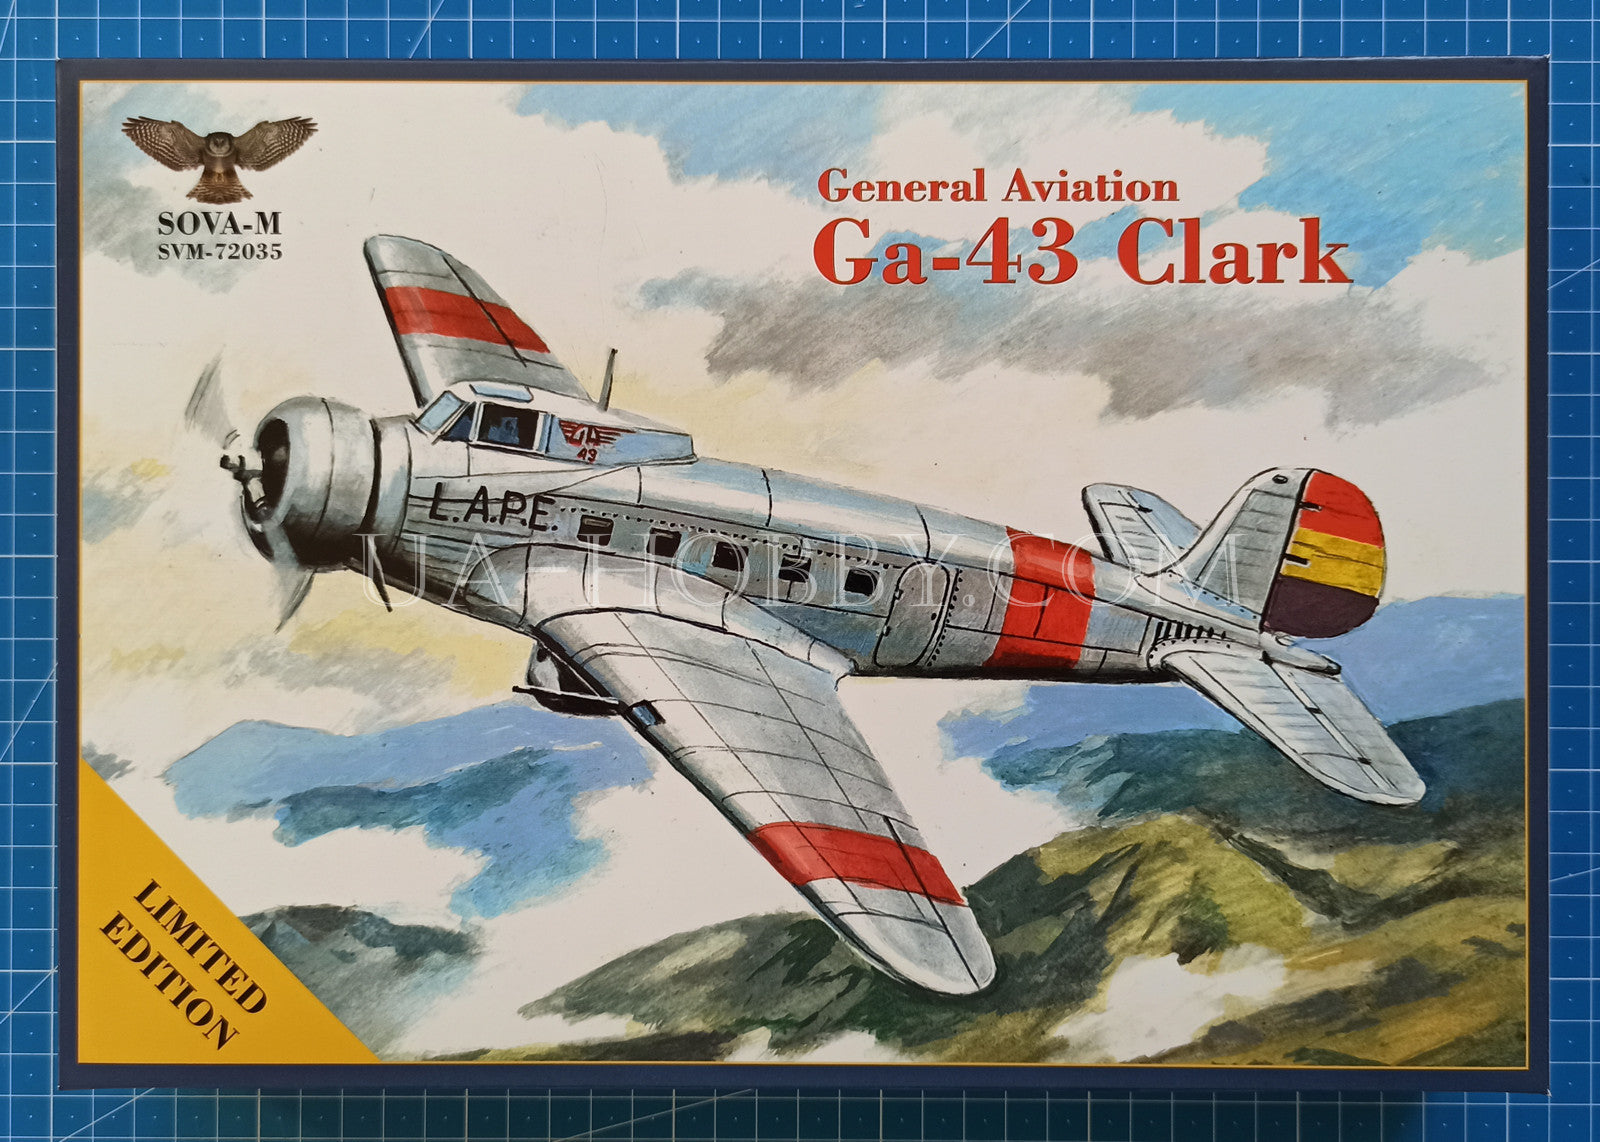 1/72 General Aviation Ga-43 Clark. SOVA-M SVM-72035